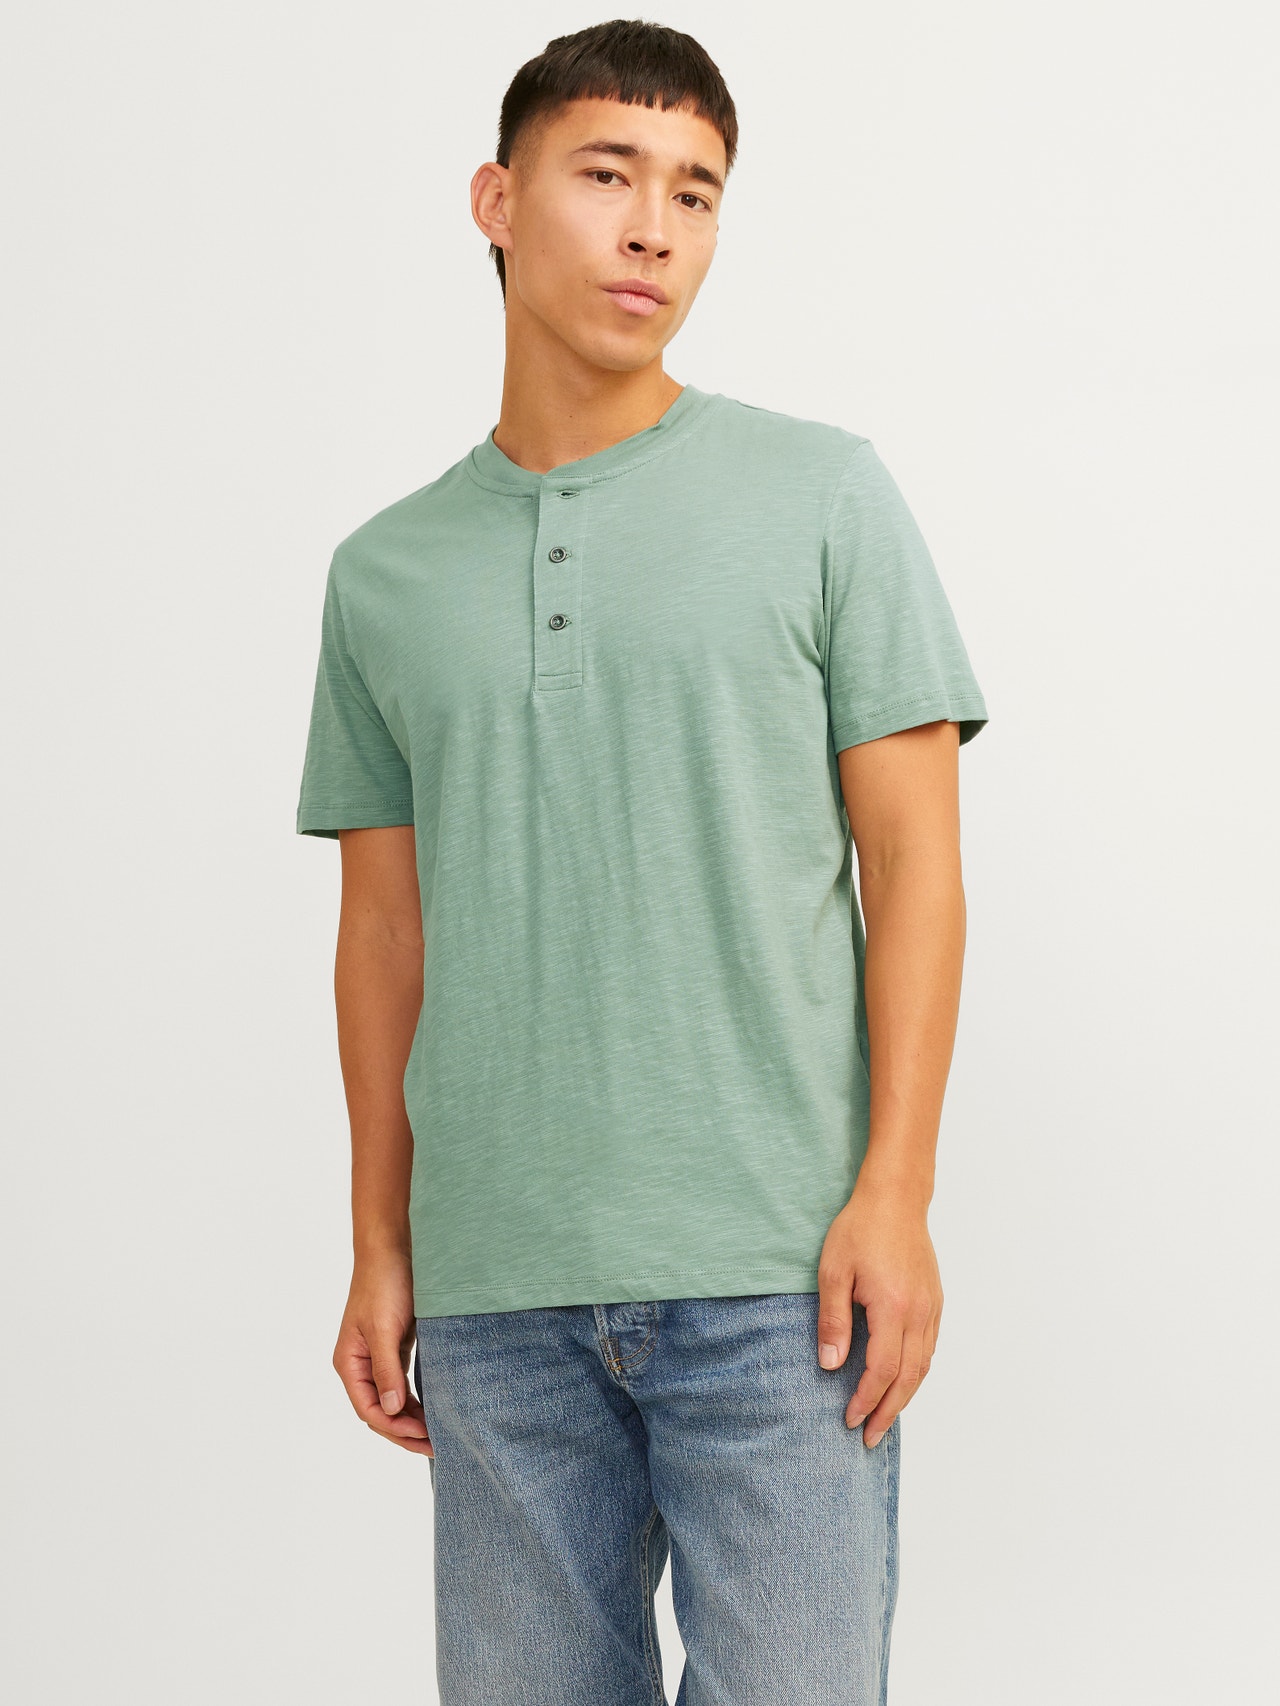 Jack & Jones Plain China Collar T-shirt -Lily Pad - 12257965